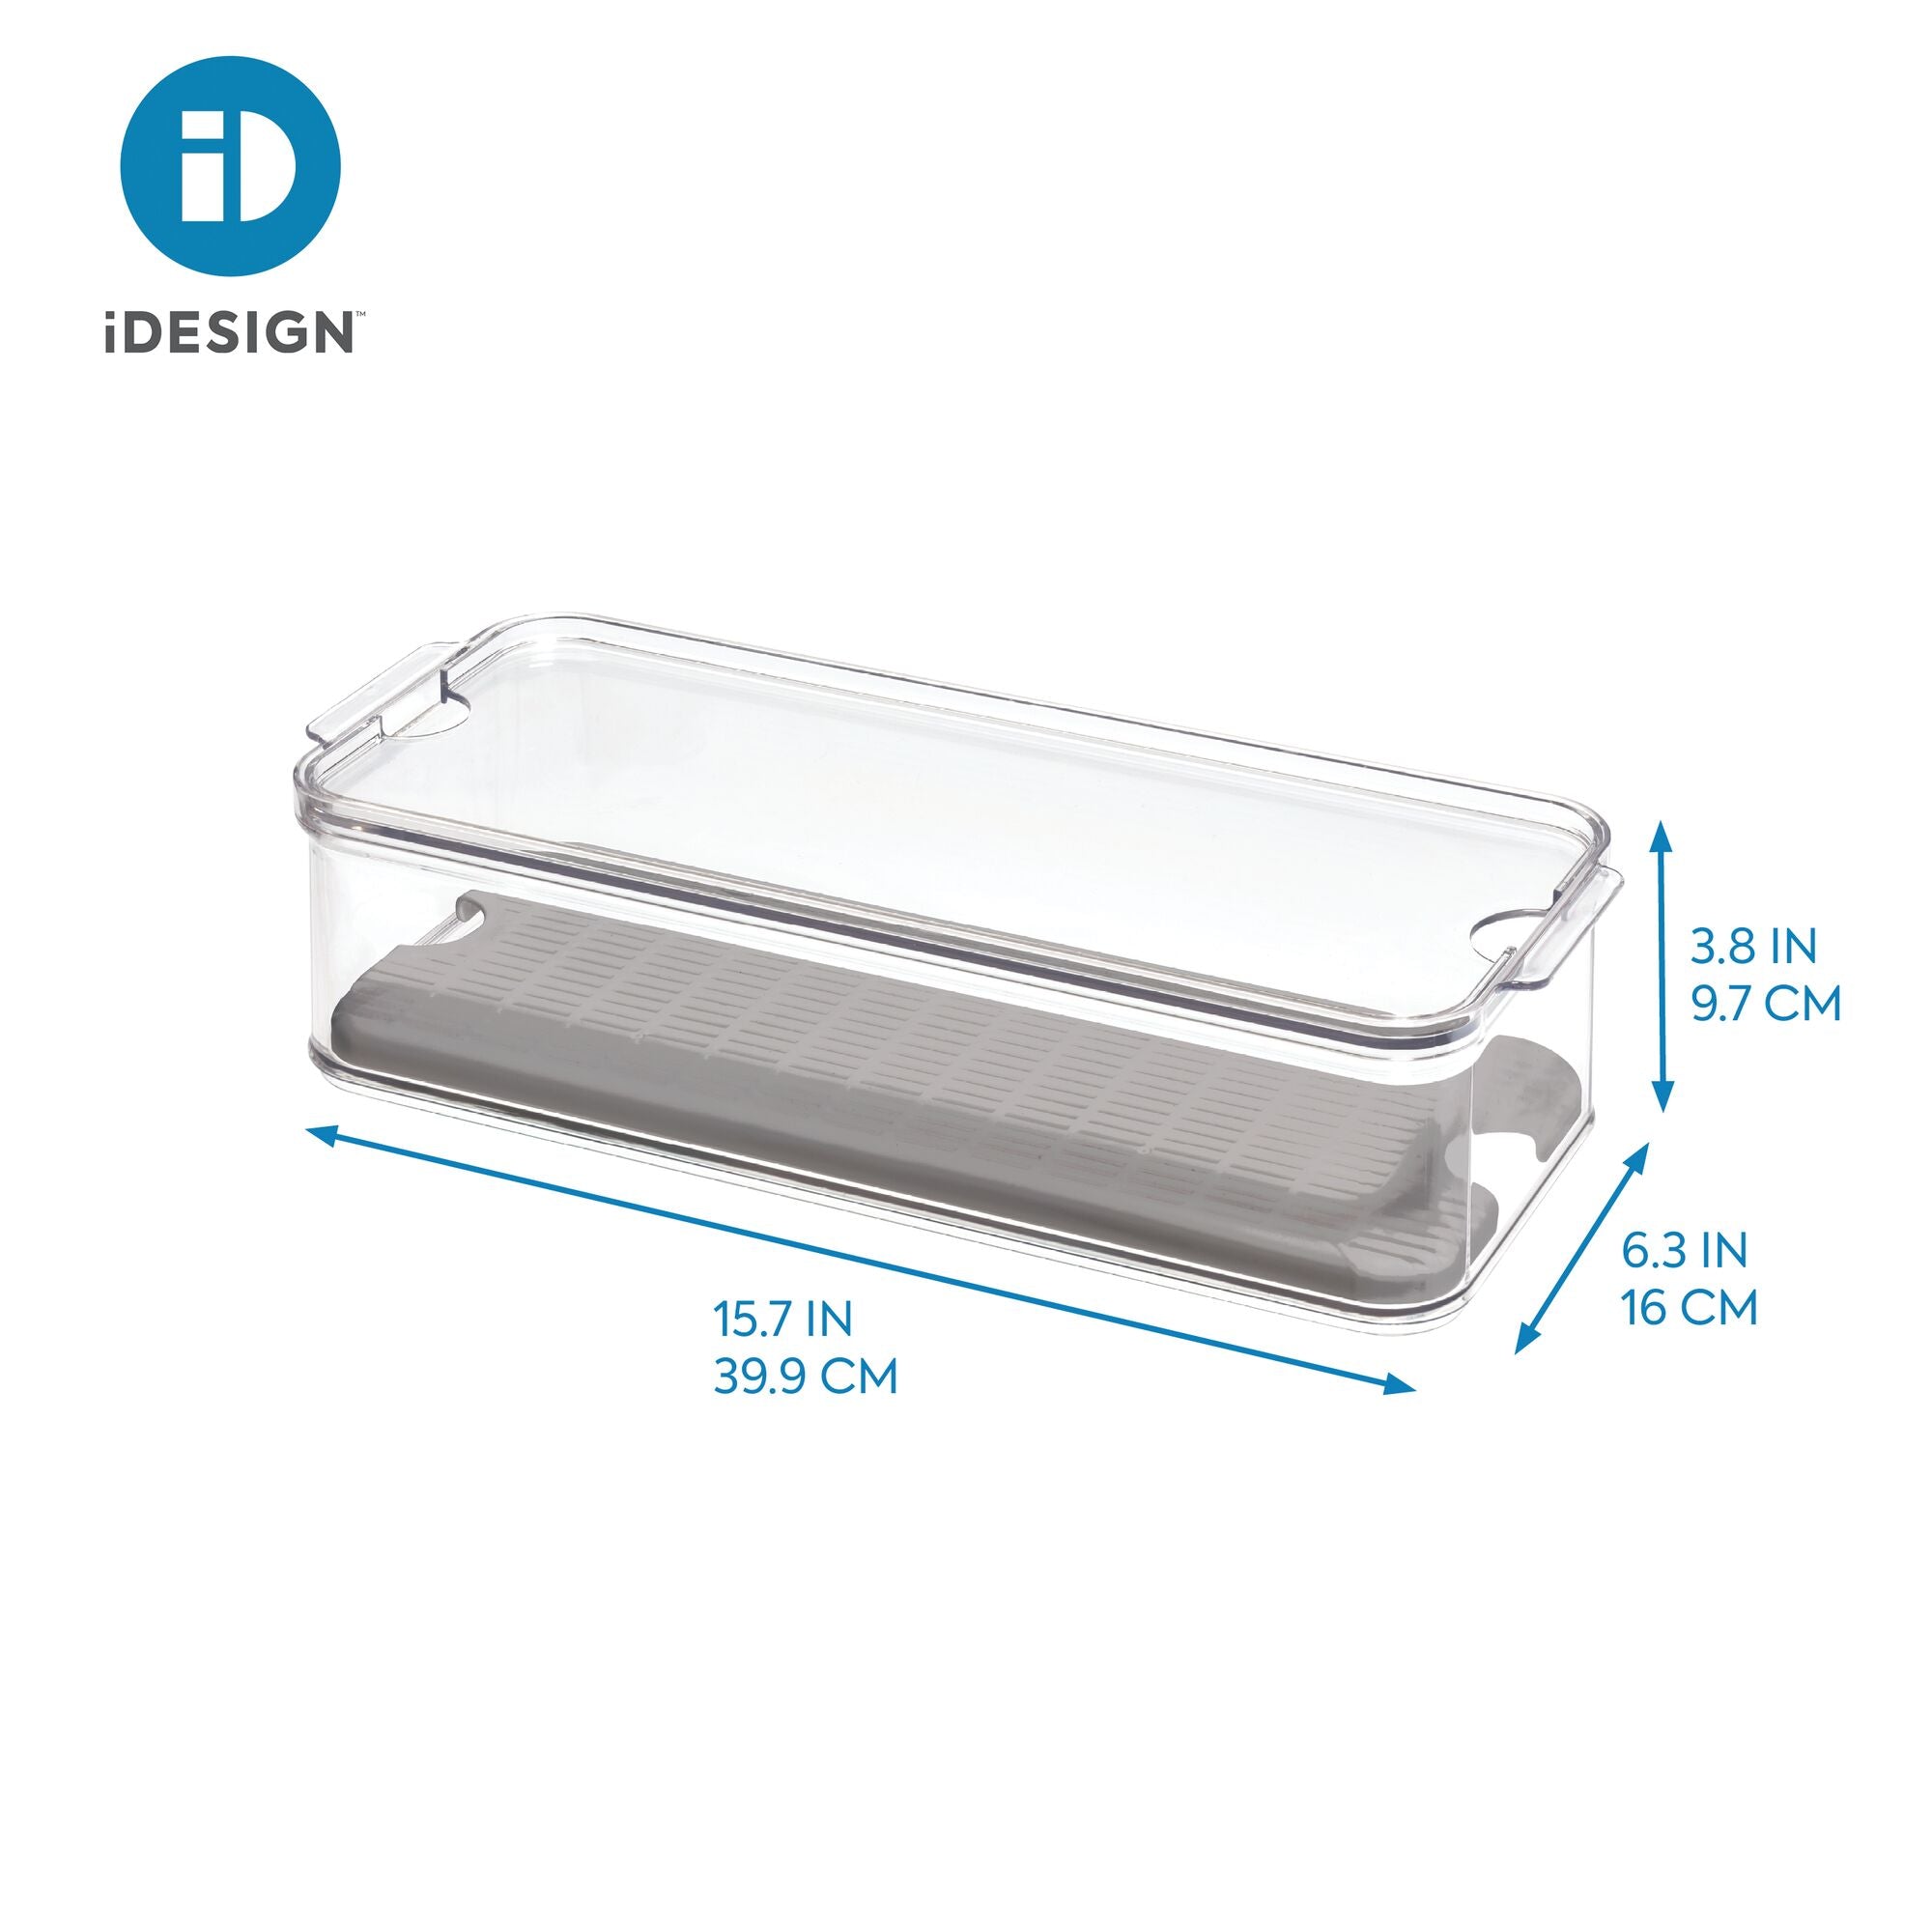 iDesign 71353 Crisp Refrigerator Bin, Plastic